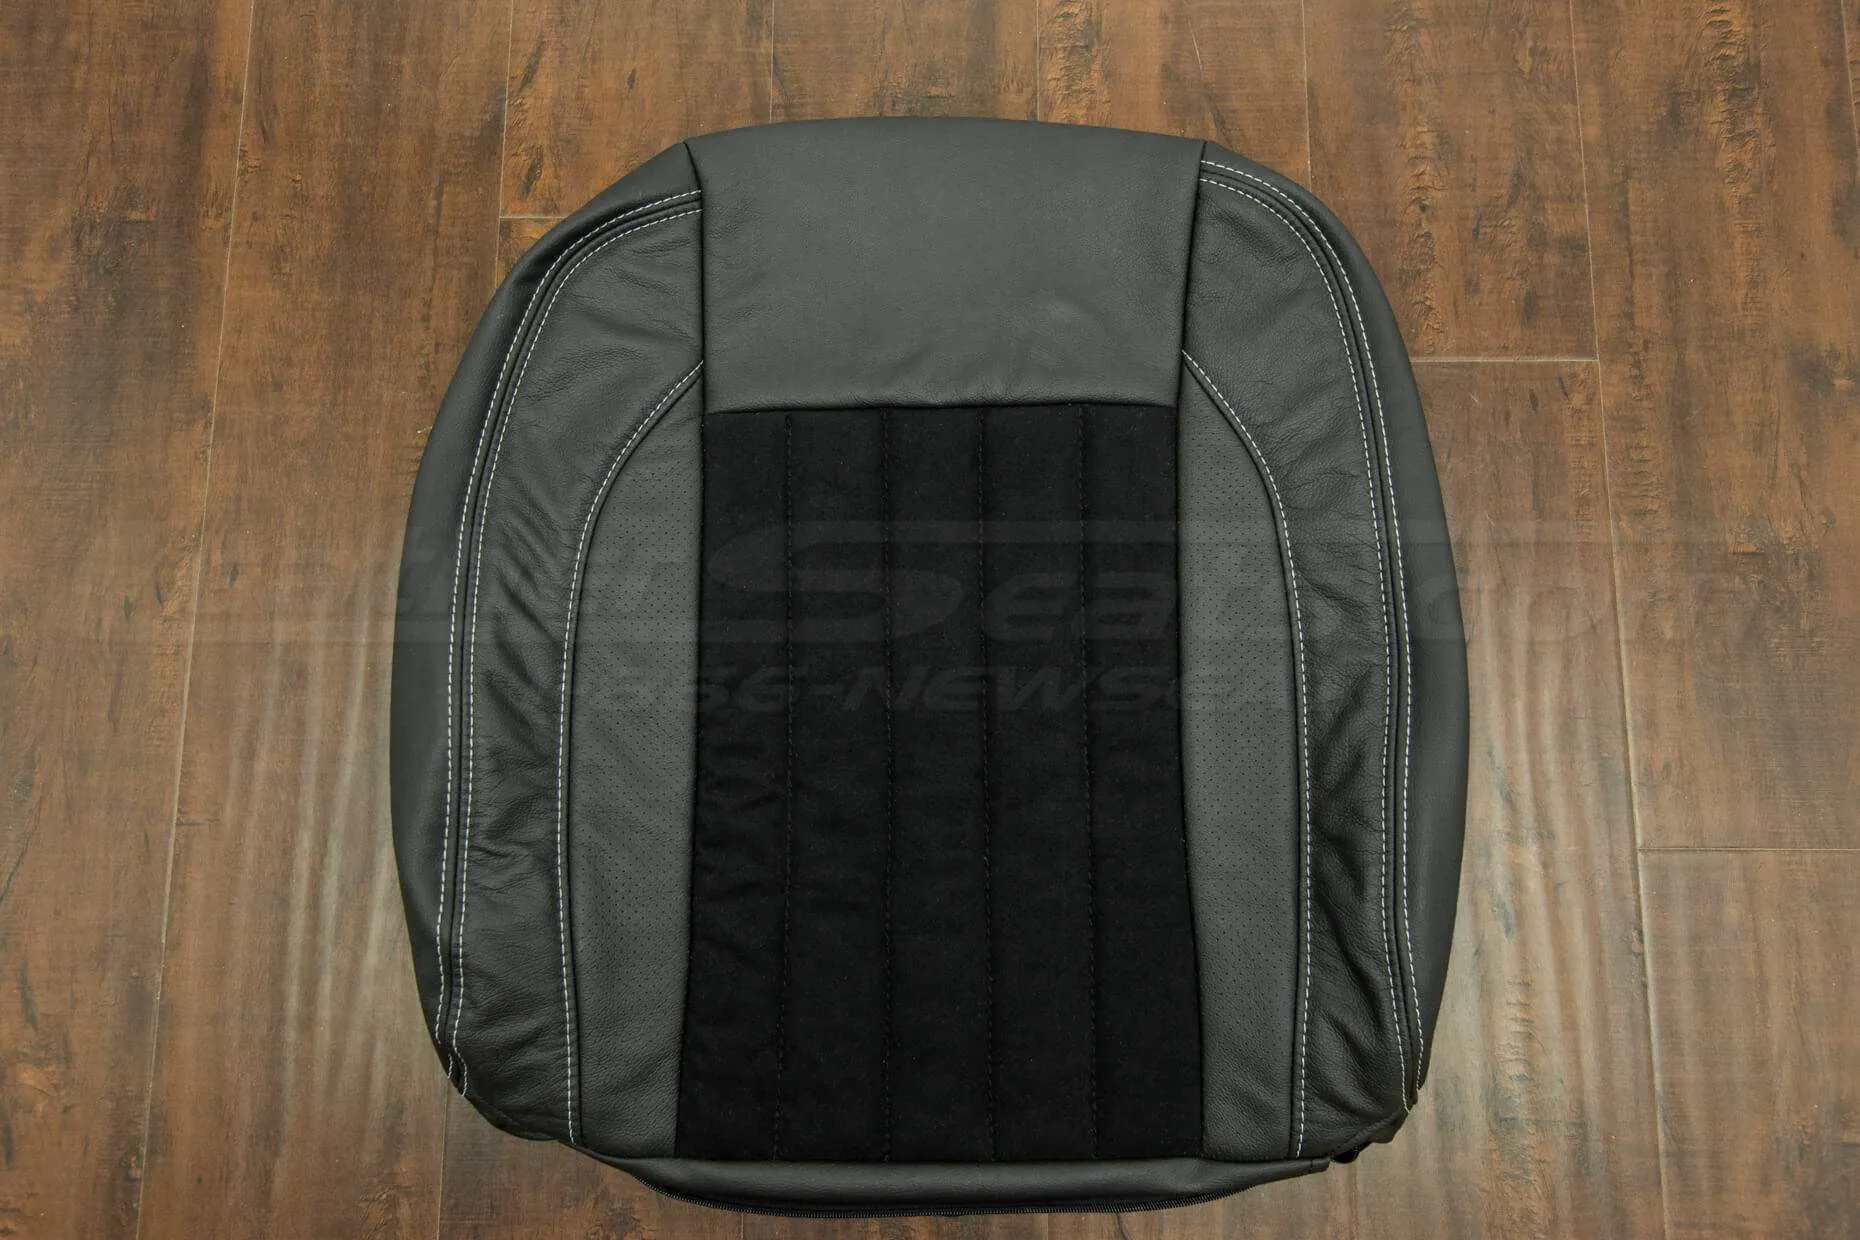 2002-2005 Dodge Ram Upholstery Kit - Dark Graphite & Black Suede - Front backrest upholstery